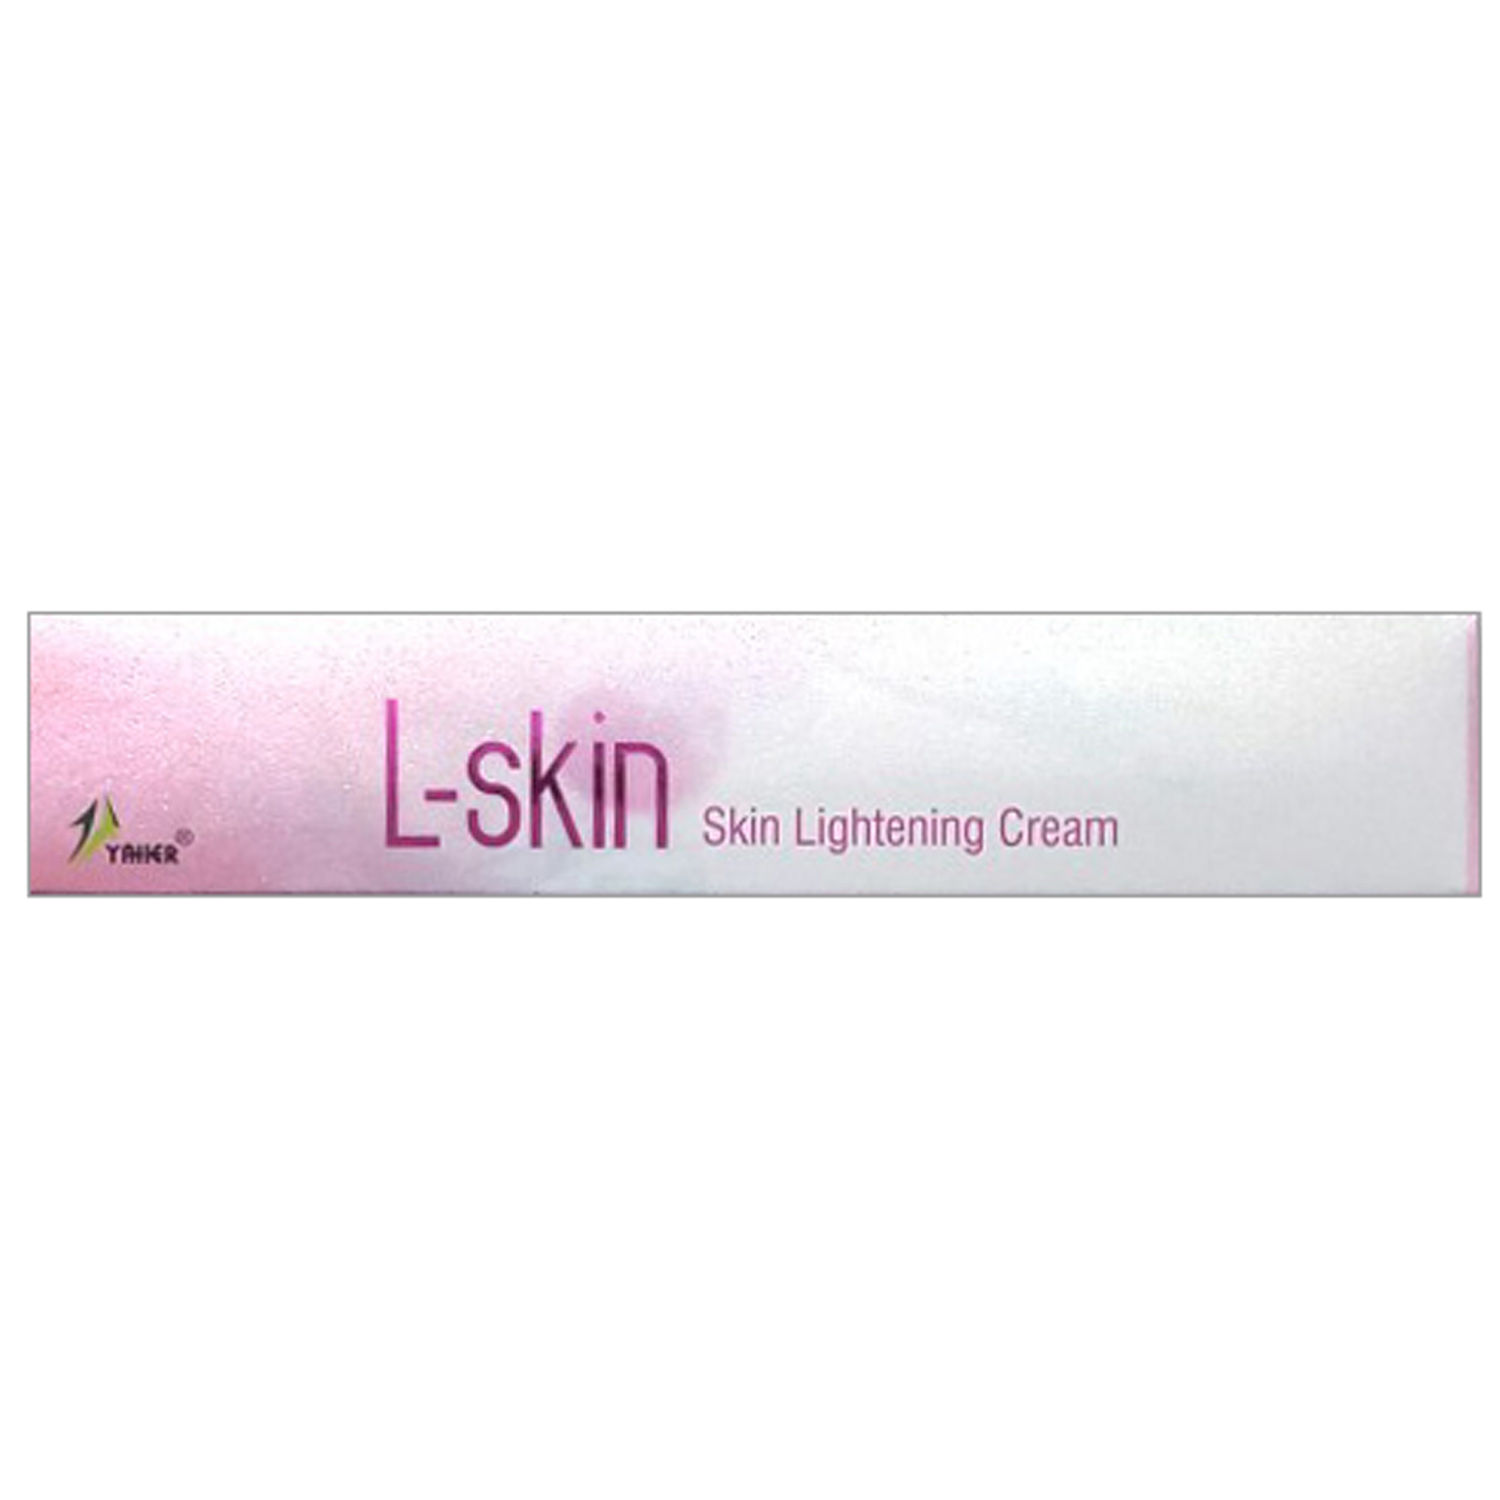 L-Skin Skin Lightening Cream, 15 gm, Pack of 1 